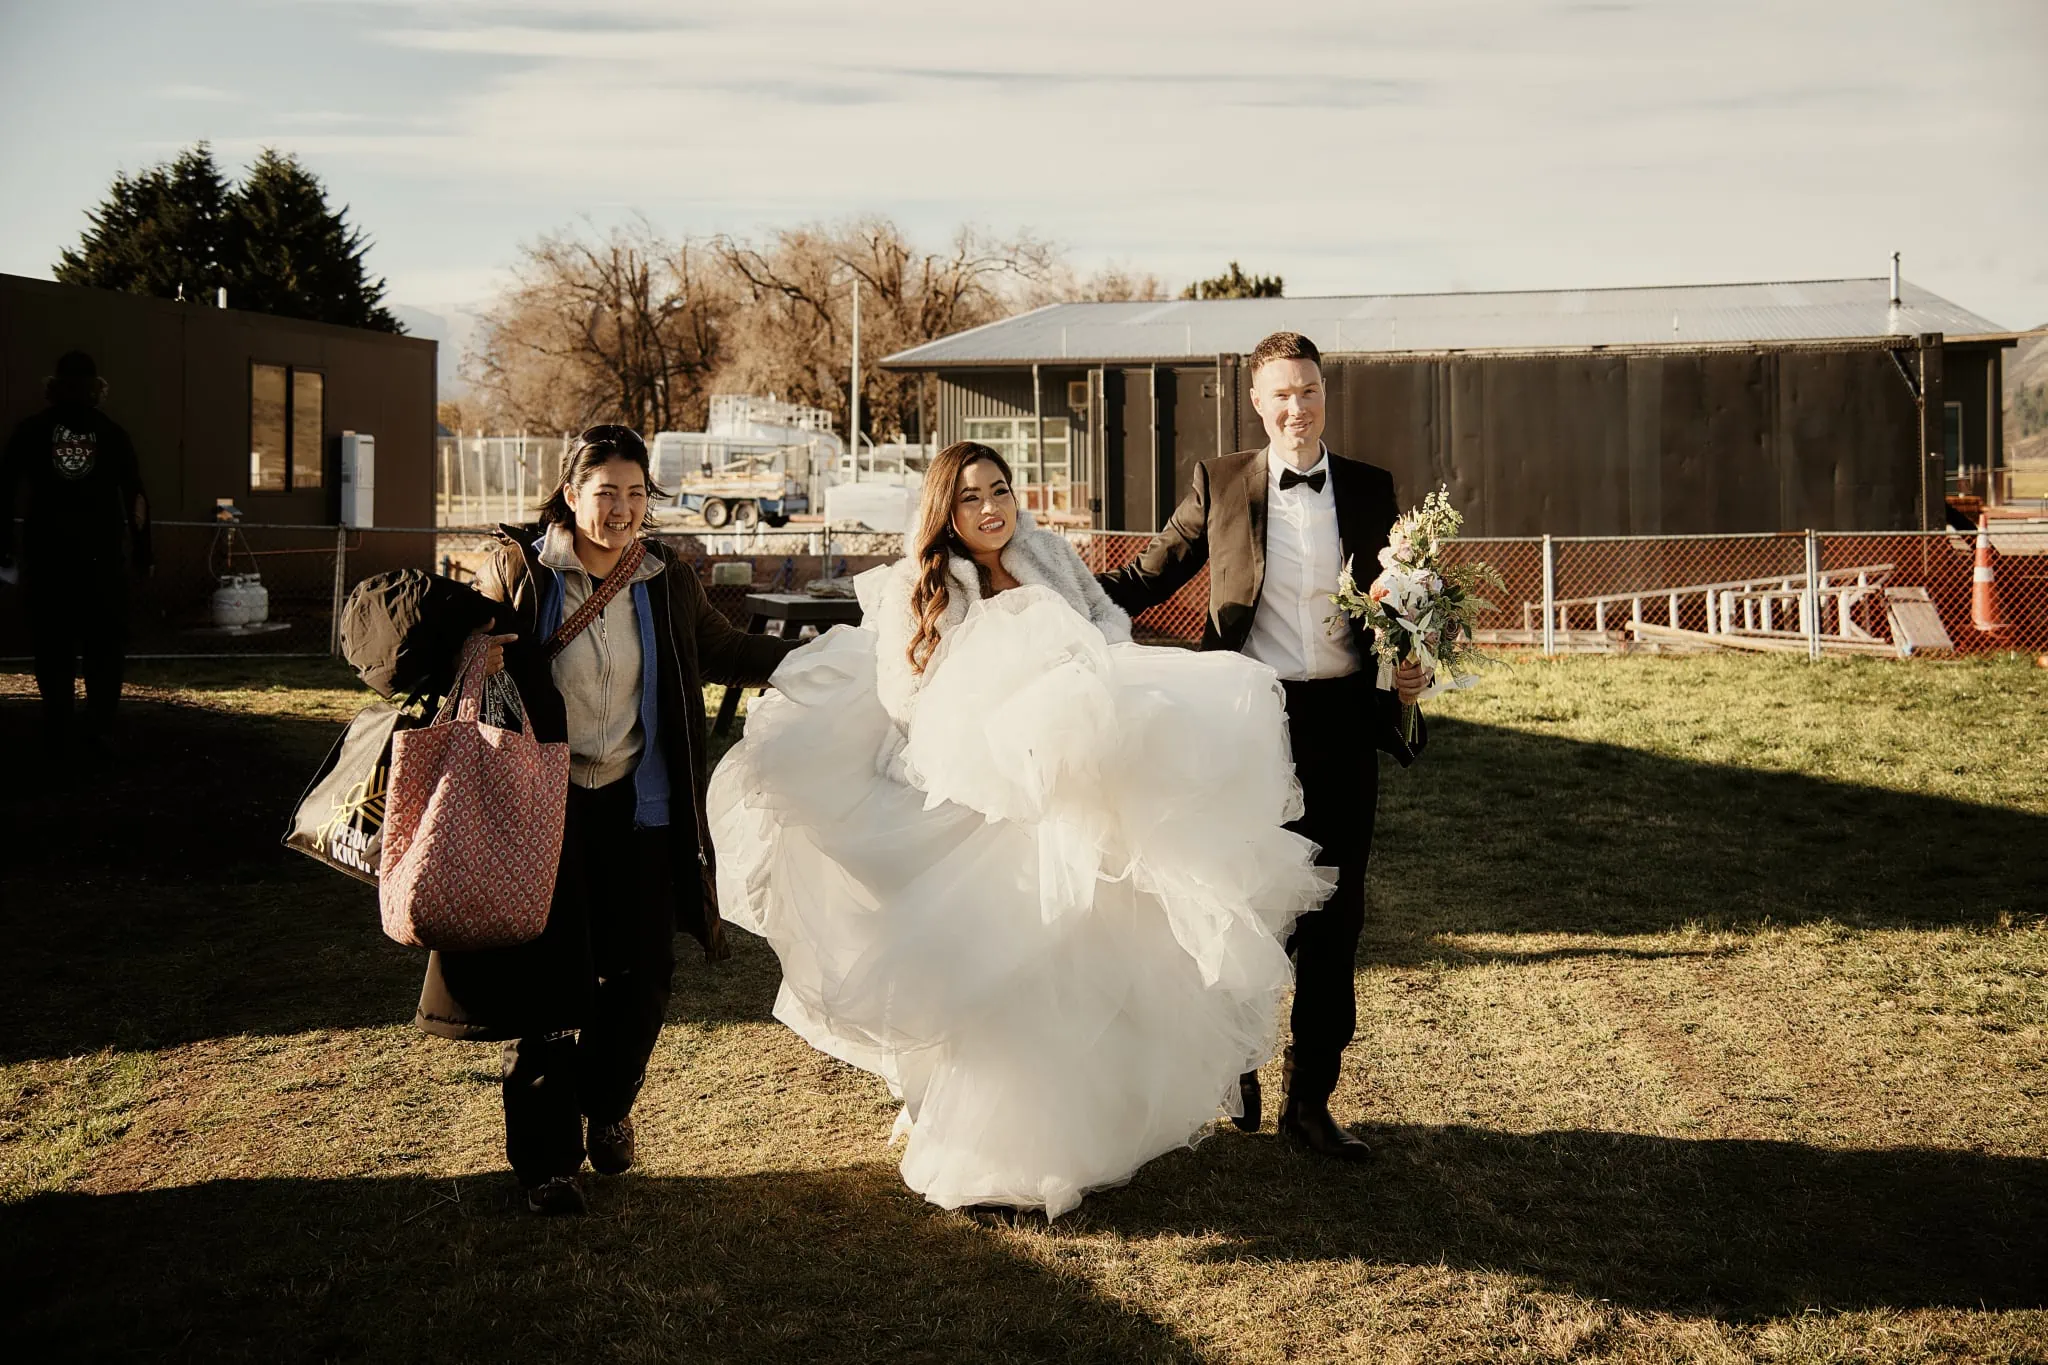 Queenstown New Zealand Elopement Wedding Photographer - Amy and Callum have a Queenstown Heli Pre Wedding Shoot, walking through a grassy field.